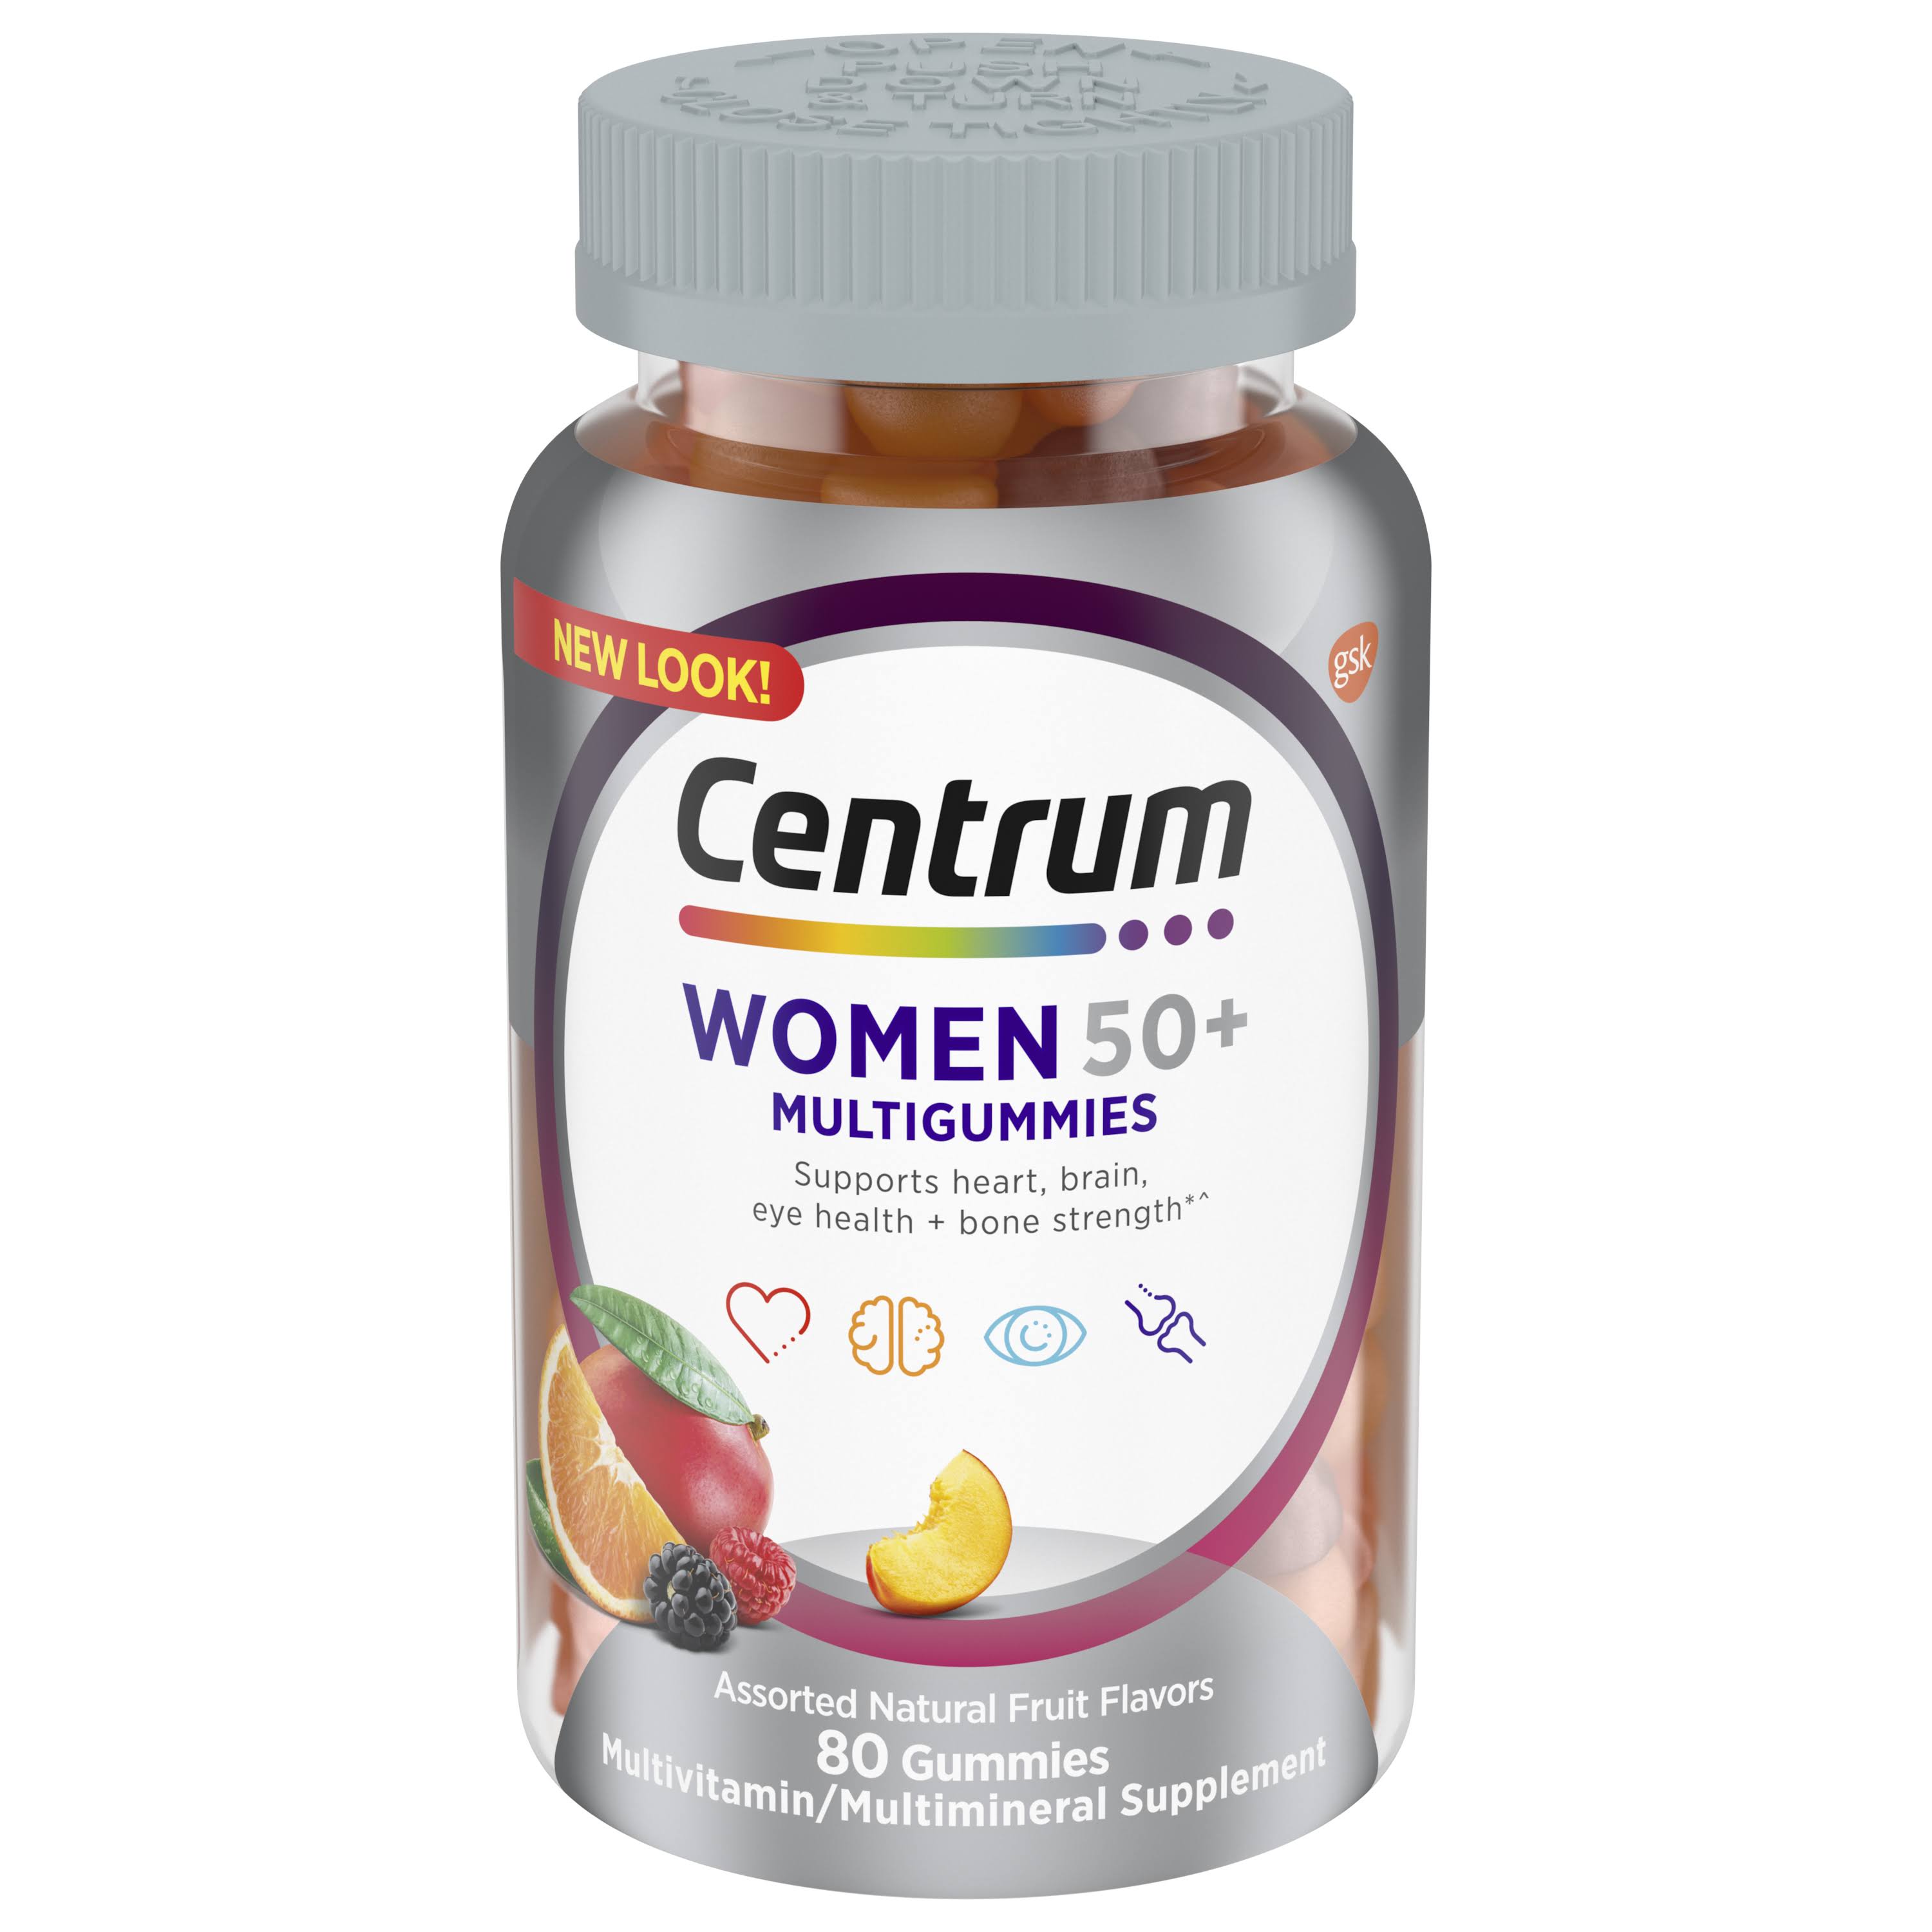 Centrum Multivitamin/Multimineral Supplement, Gummies, Women 50+, Assorted Natural Fruit Flavors - 80 gummies